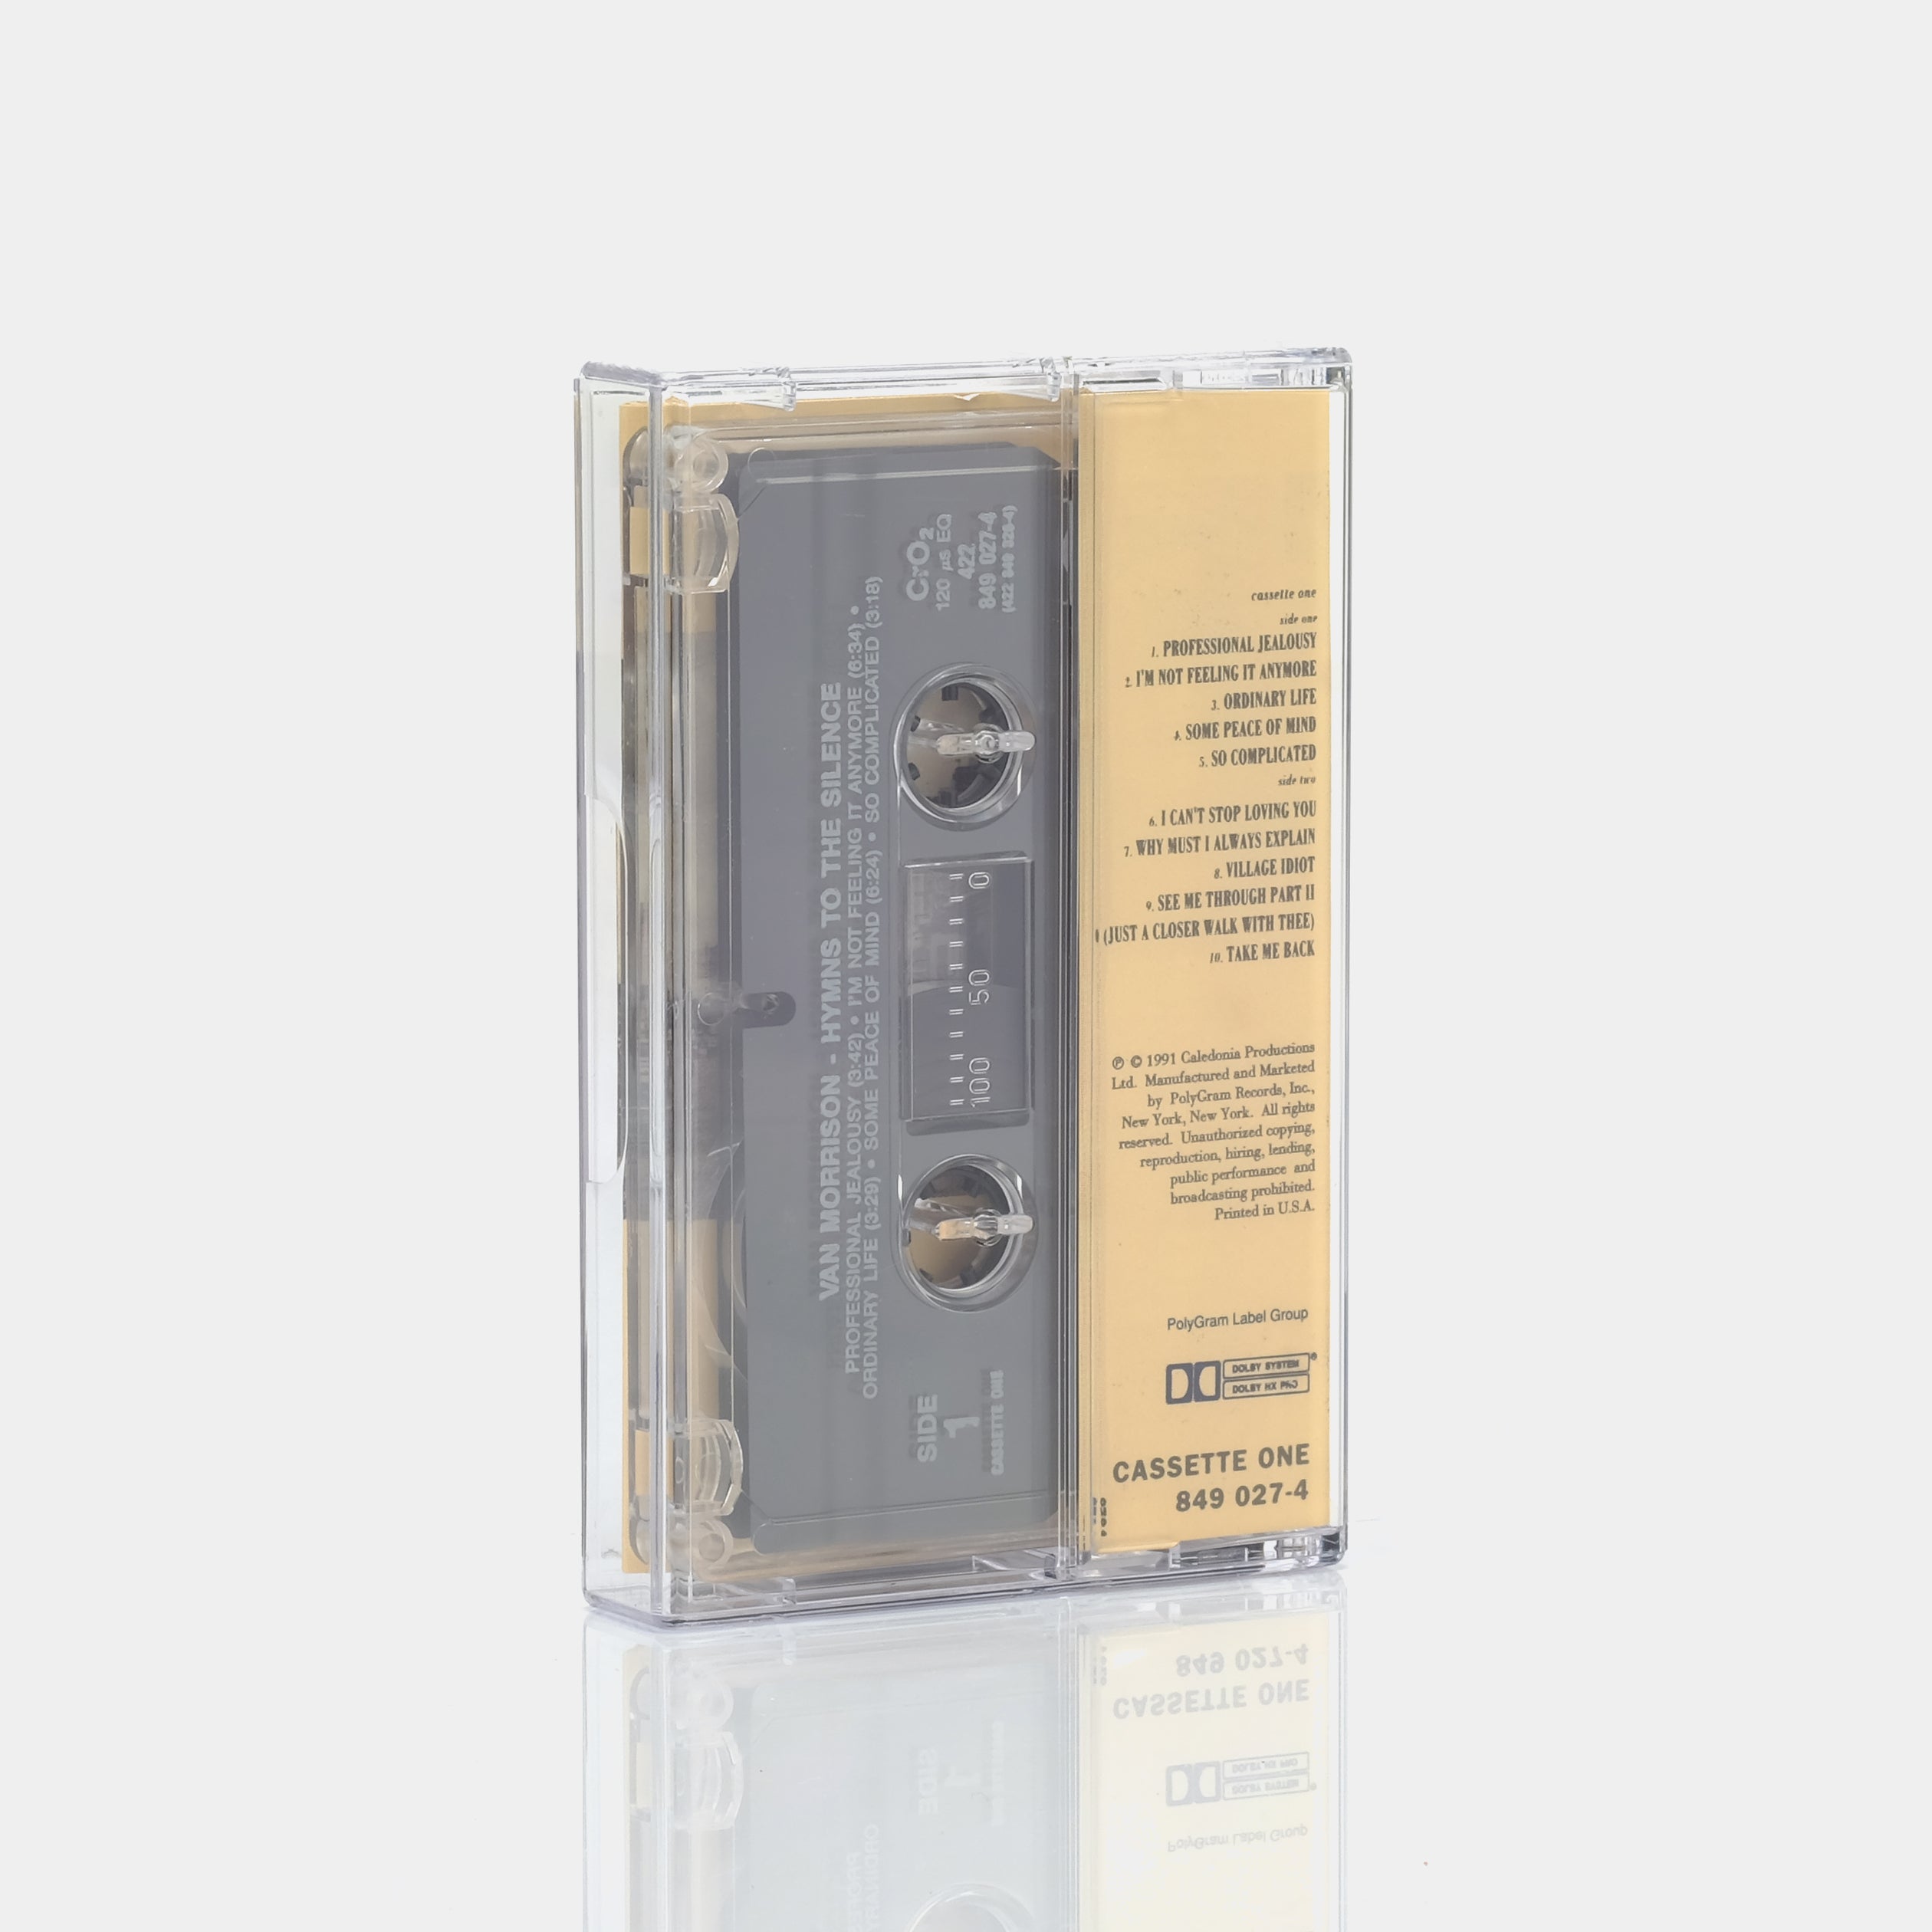 Van Morrison - Hymns To The Silence Cassette Tape #1